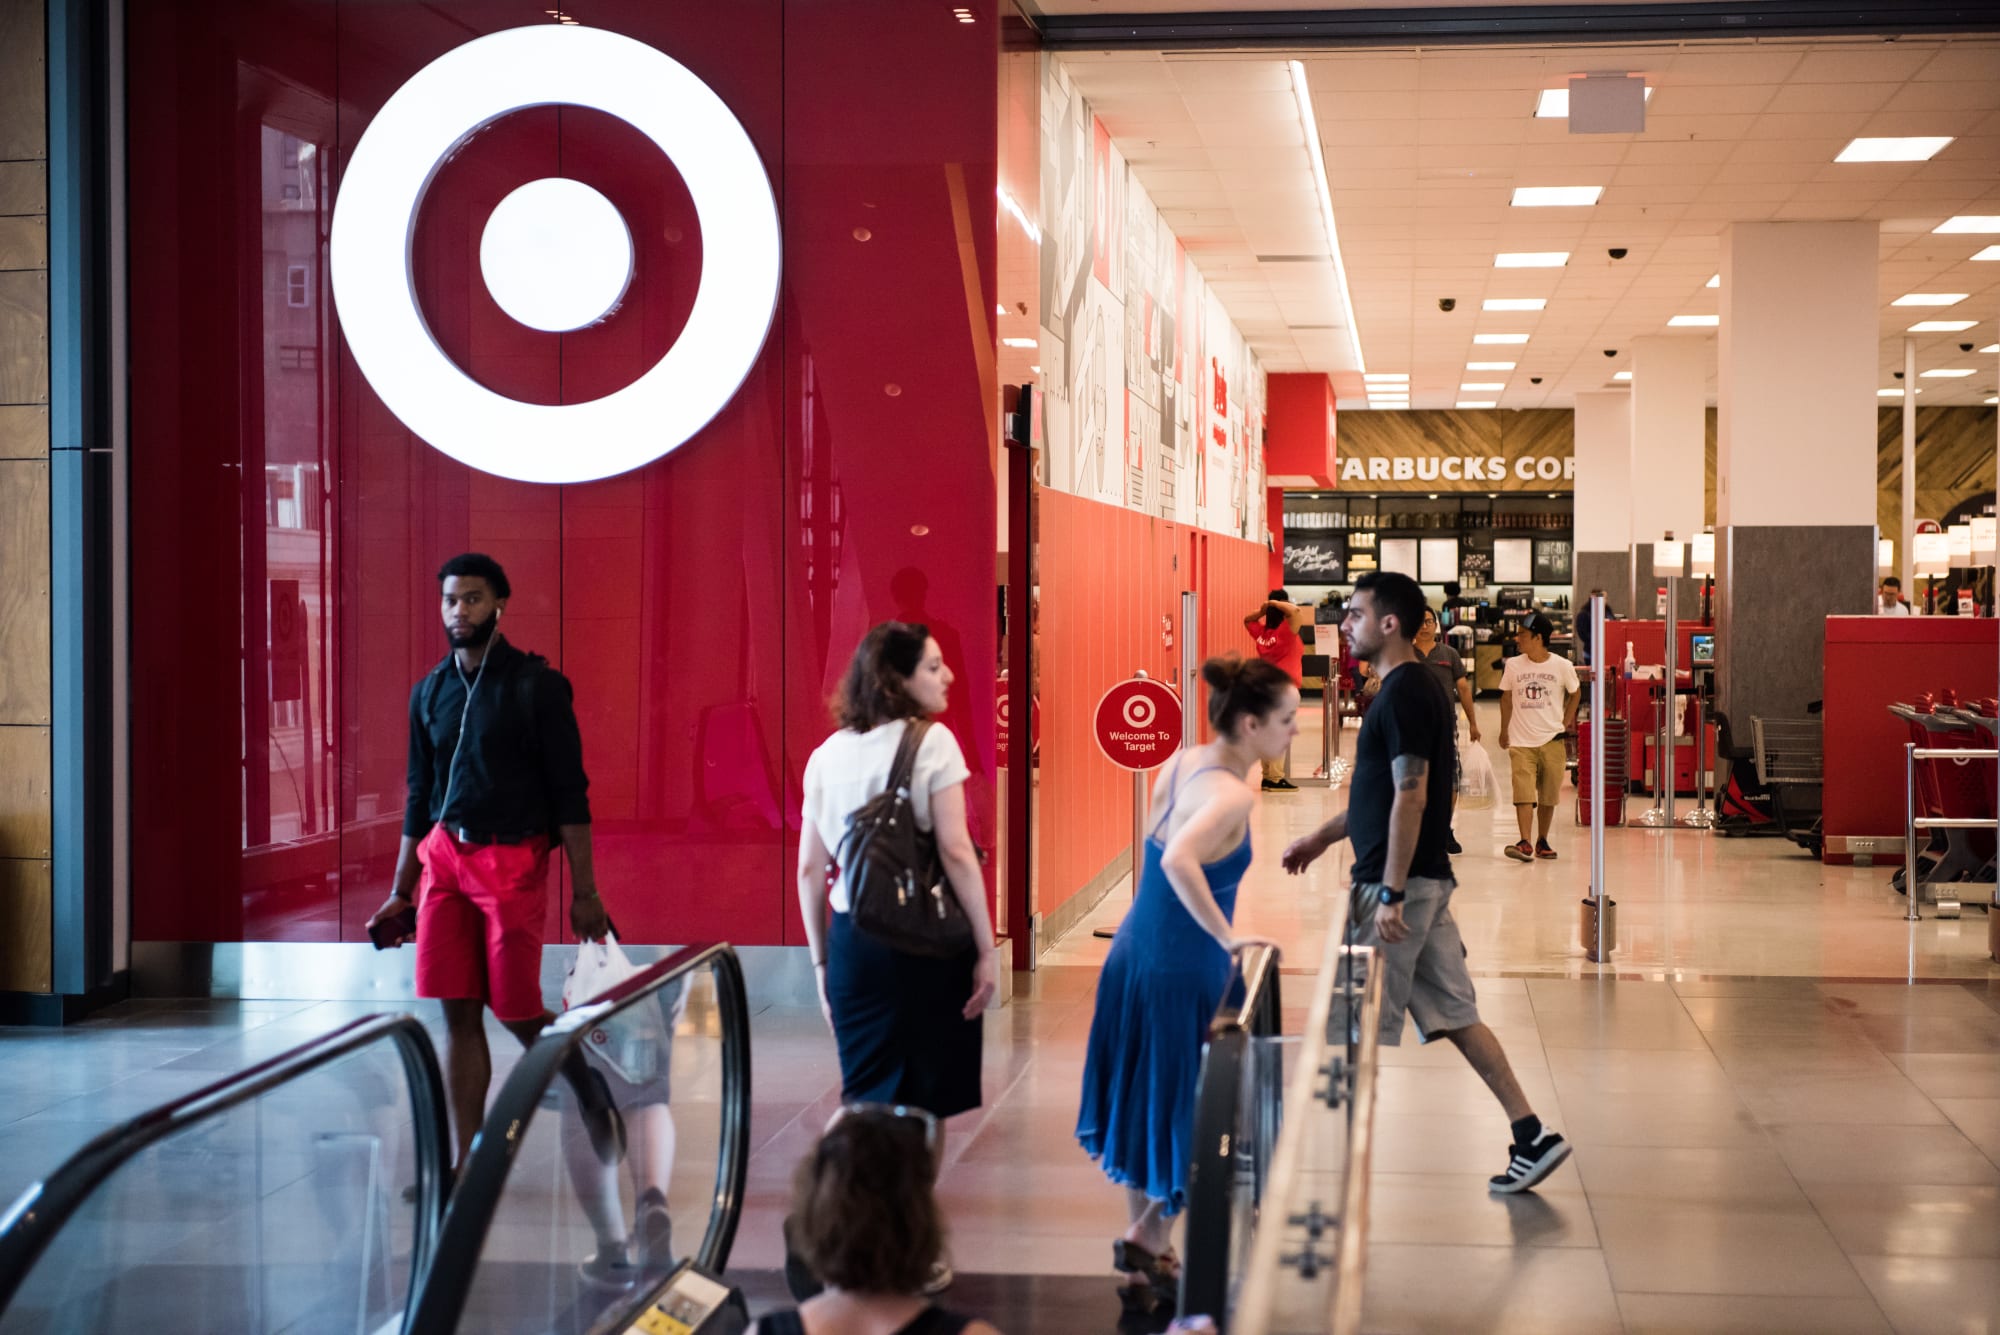 Is Target open on Christmas?